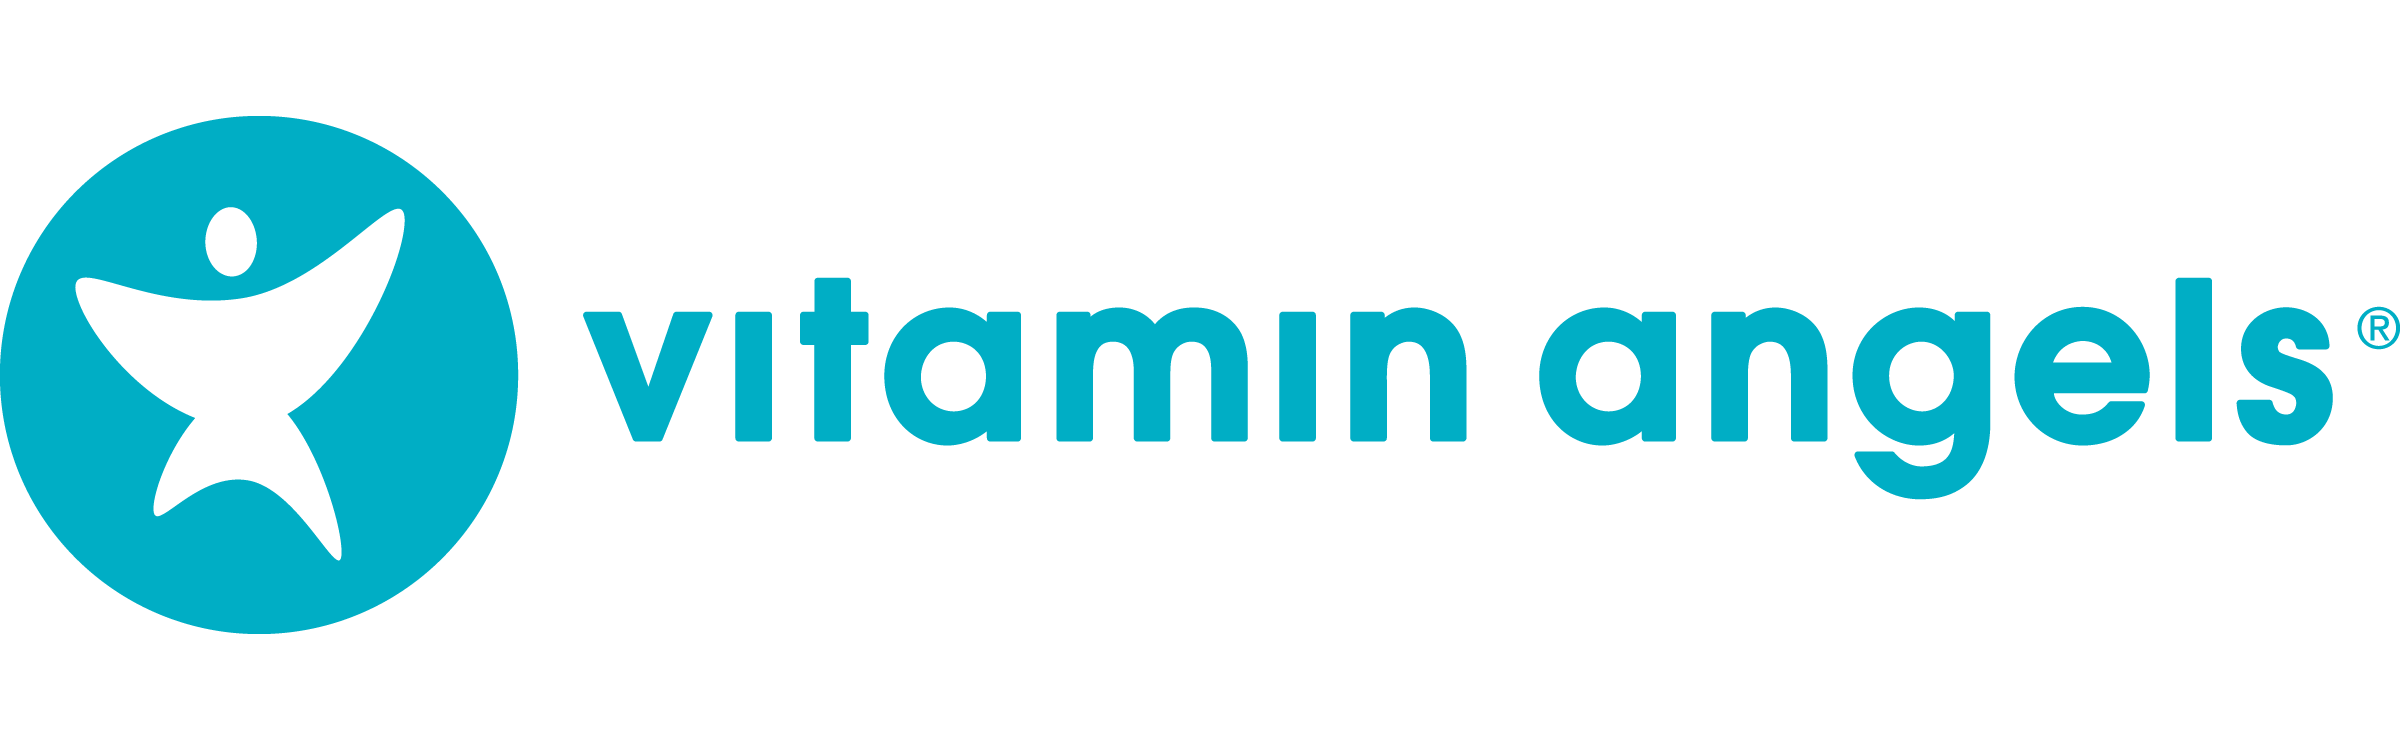 Primary_Vitamin_Angels_logo_2017